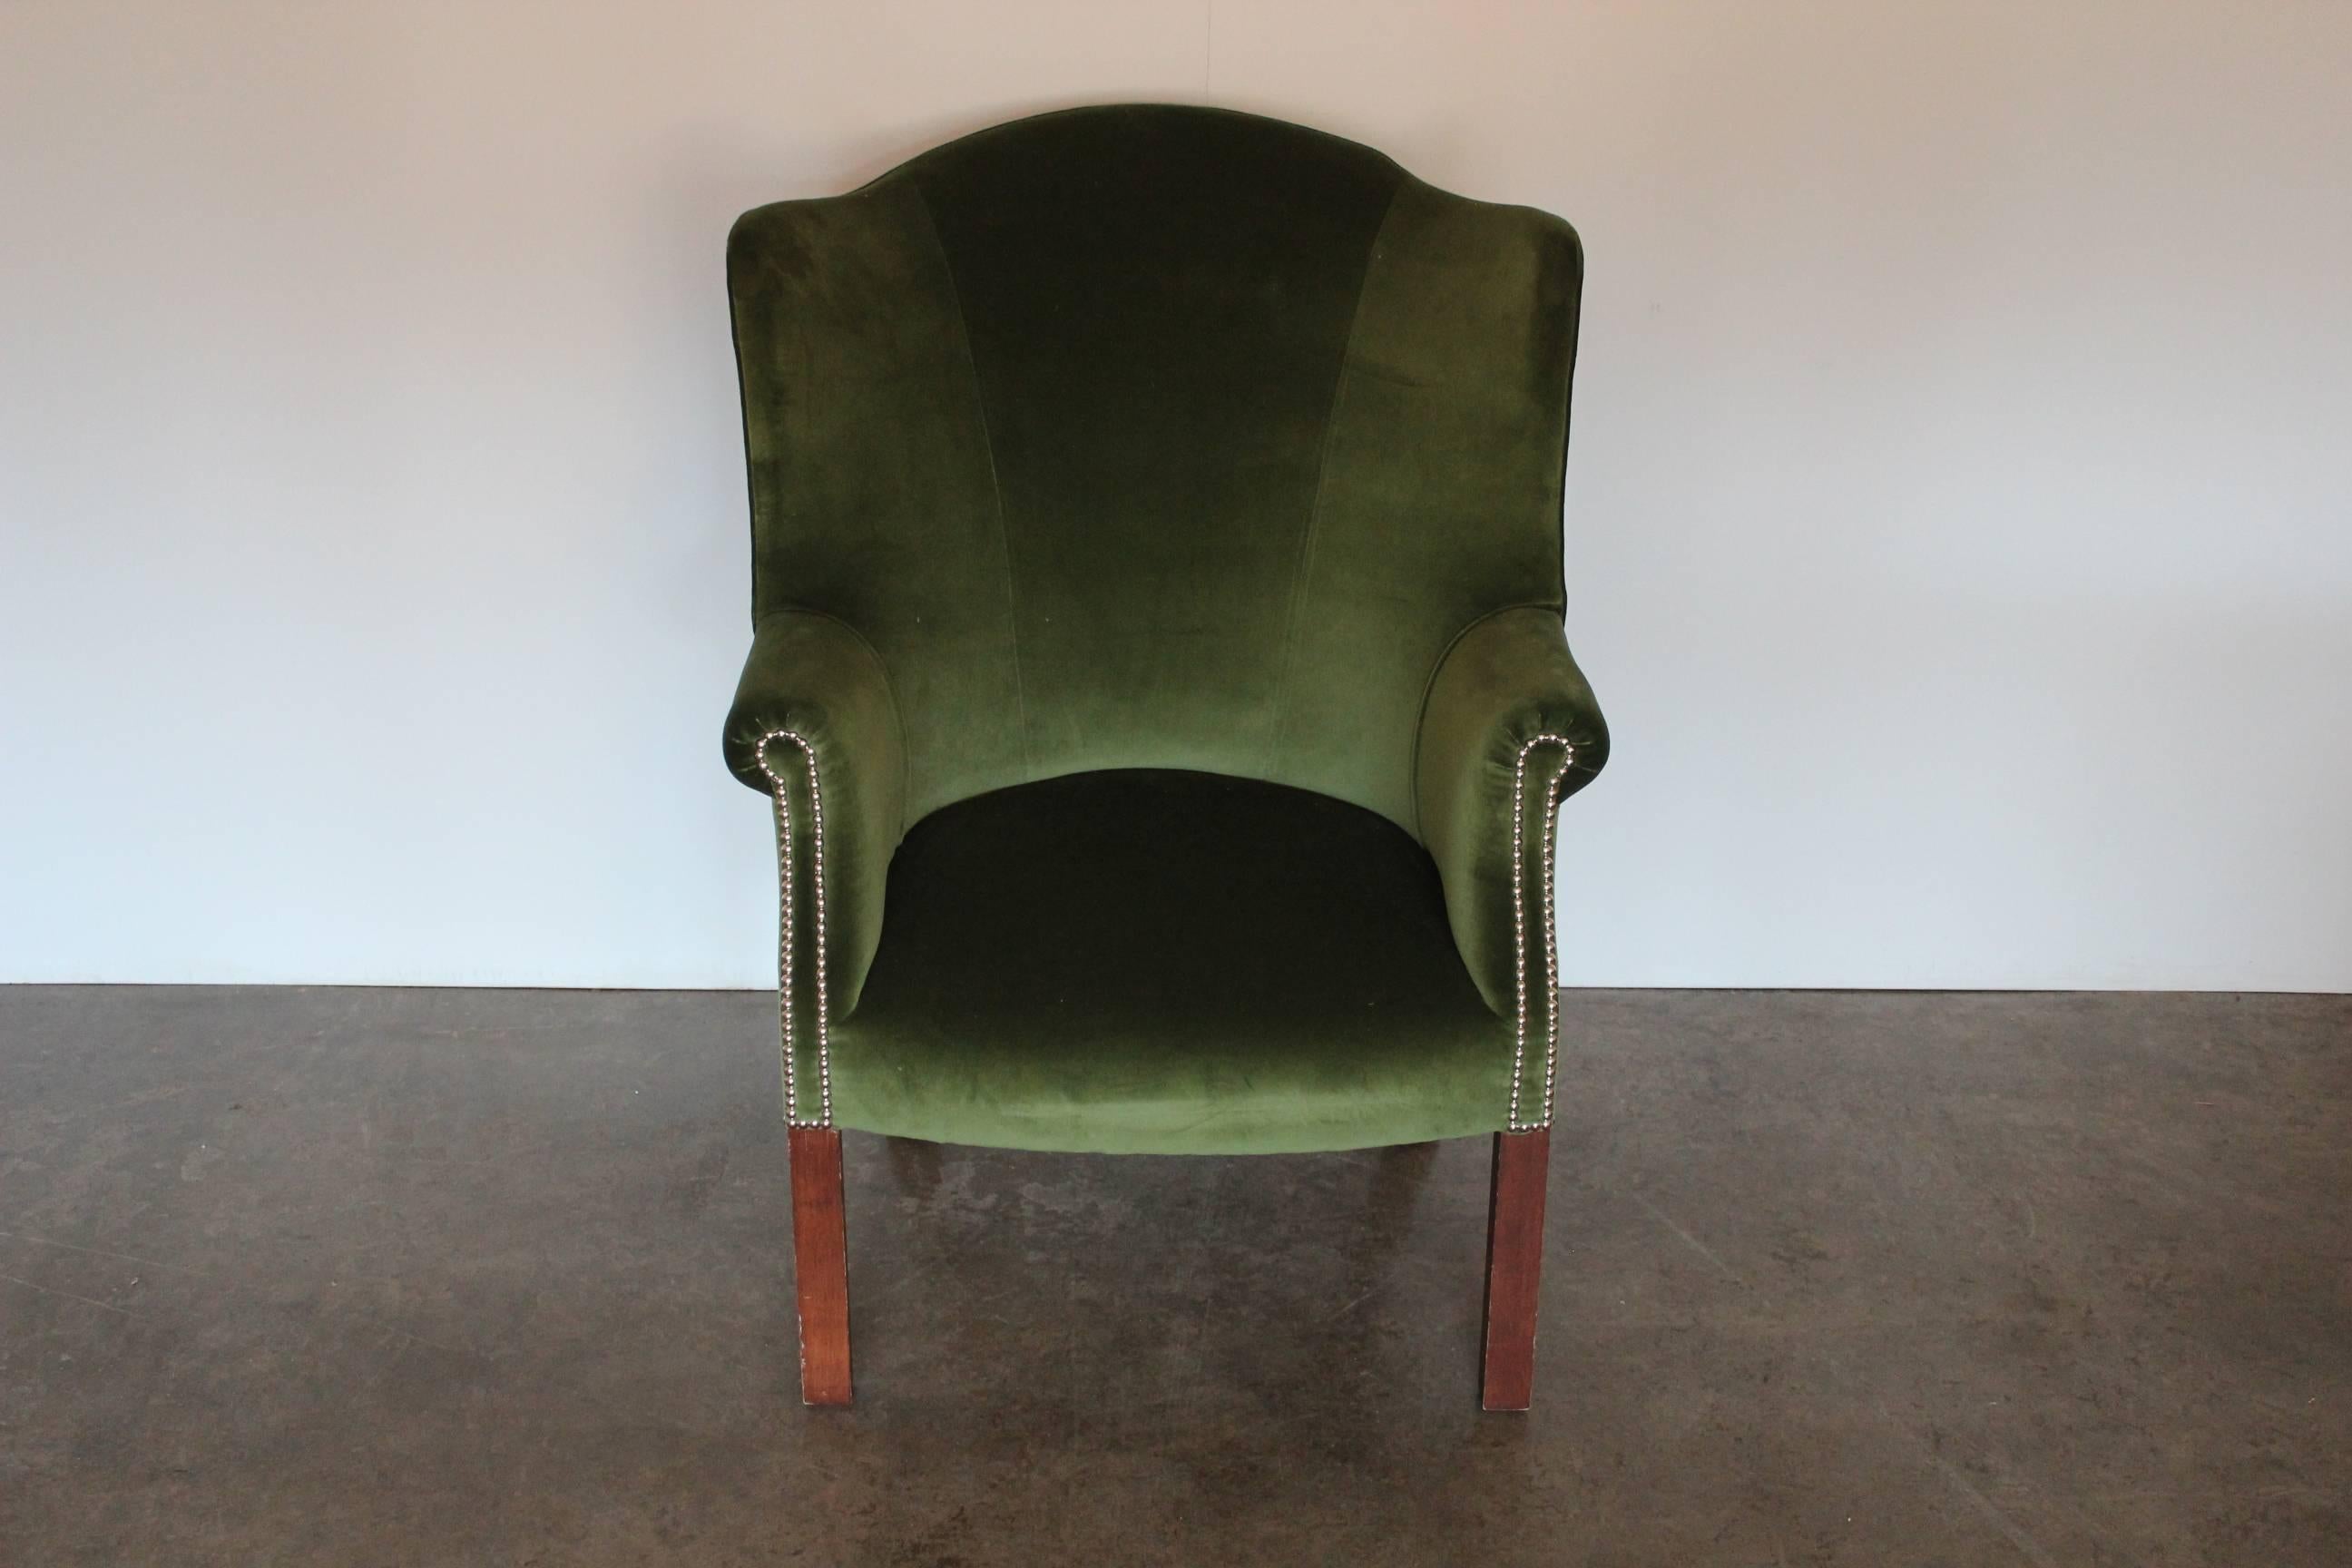 Modern Ralph Lauren Compact “Wingback” Armchair in “English Riding” Green Velvet